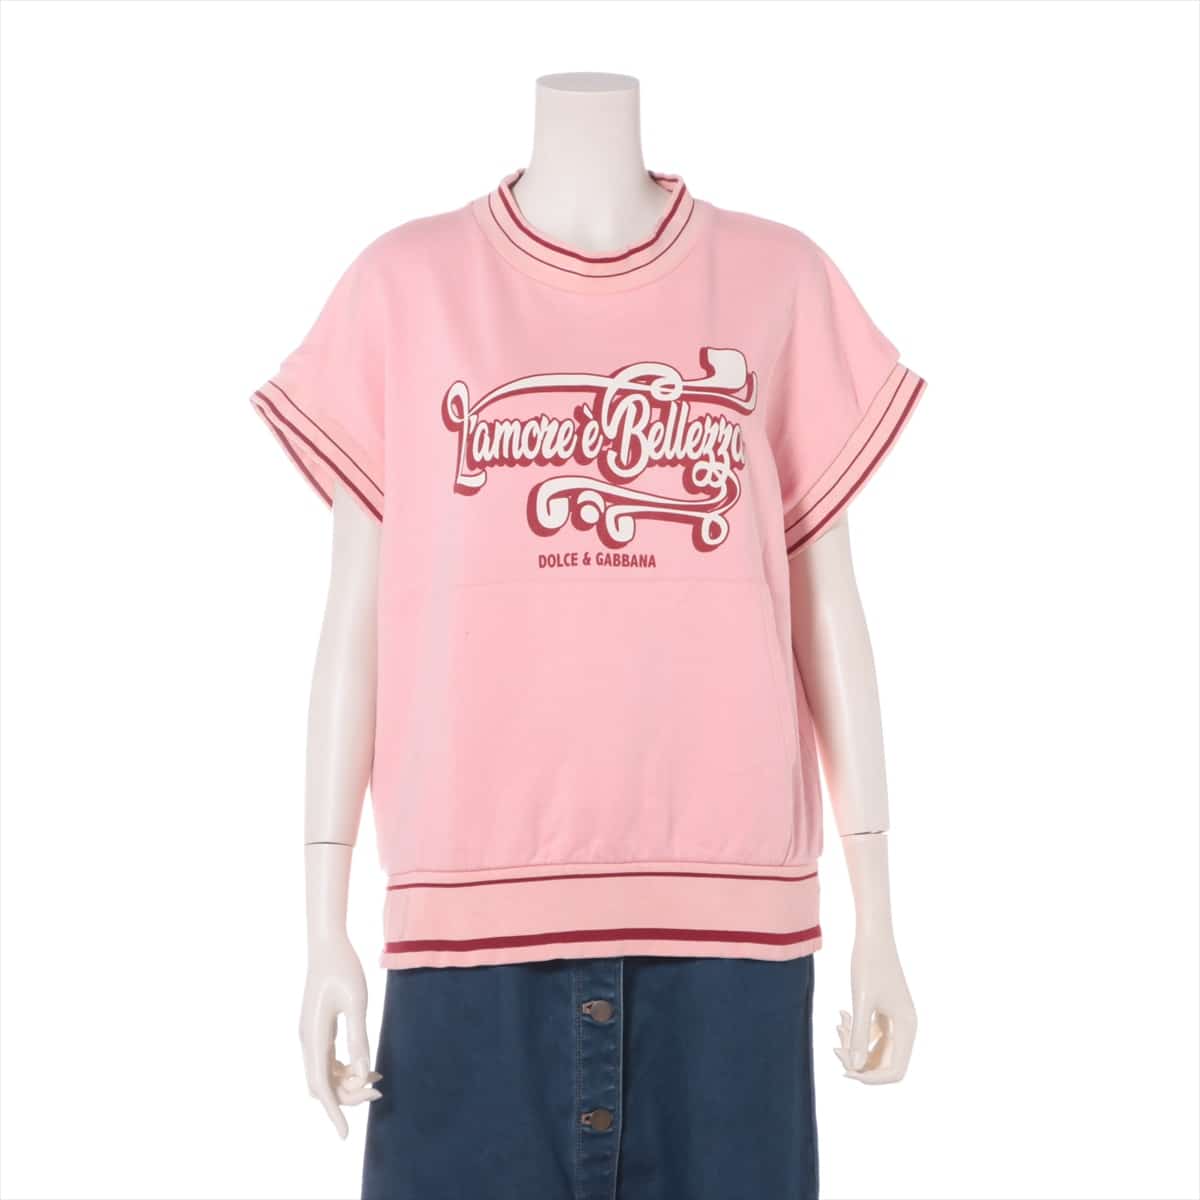 Dolce & Gabbana Cotton T-shirt 36 Ladies' Pink  Sleeveless L'Amore ? Bellezza Print sweatshirts